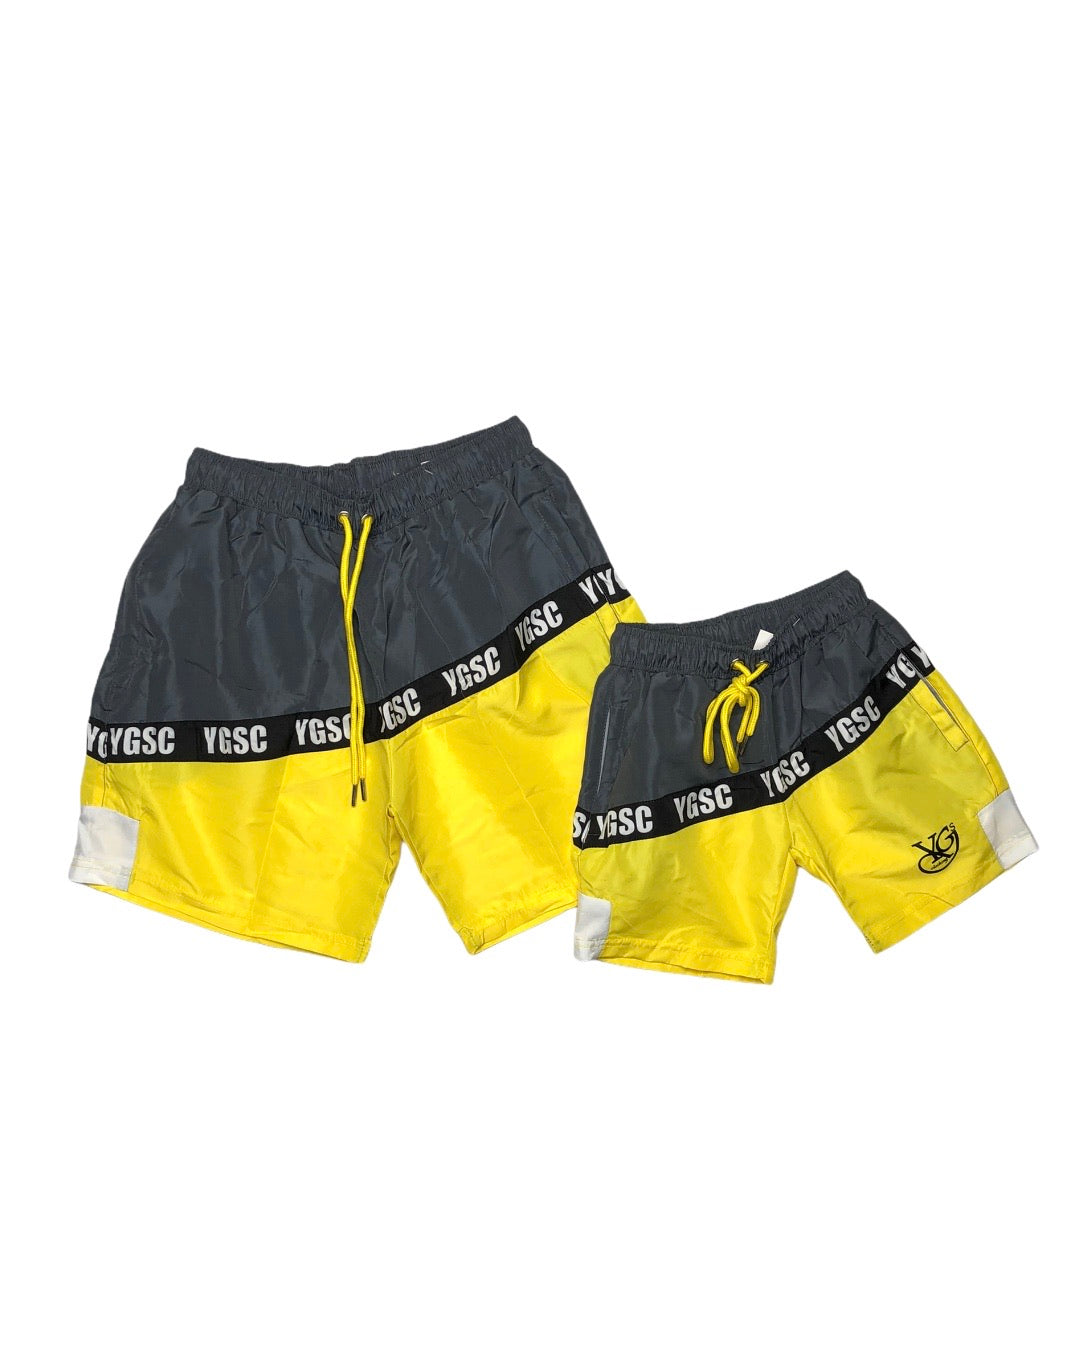 Boys YGSC (Repeat Print) dri fit shorts